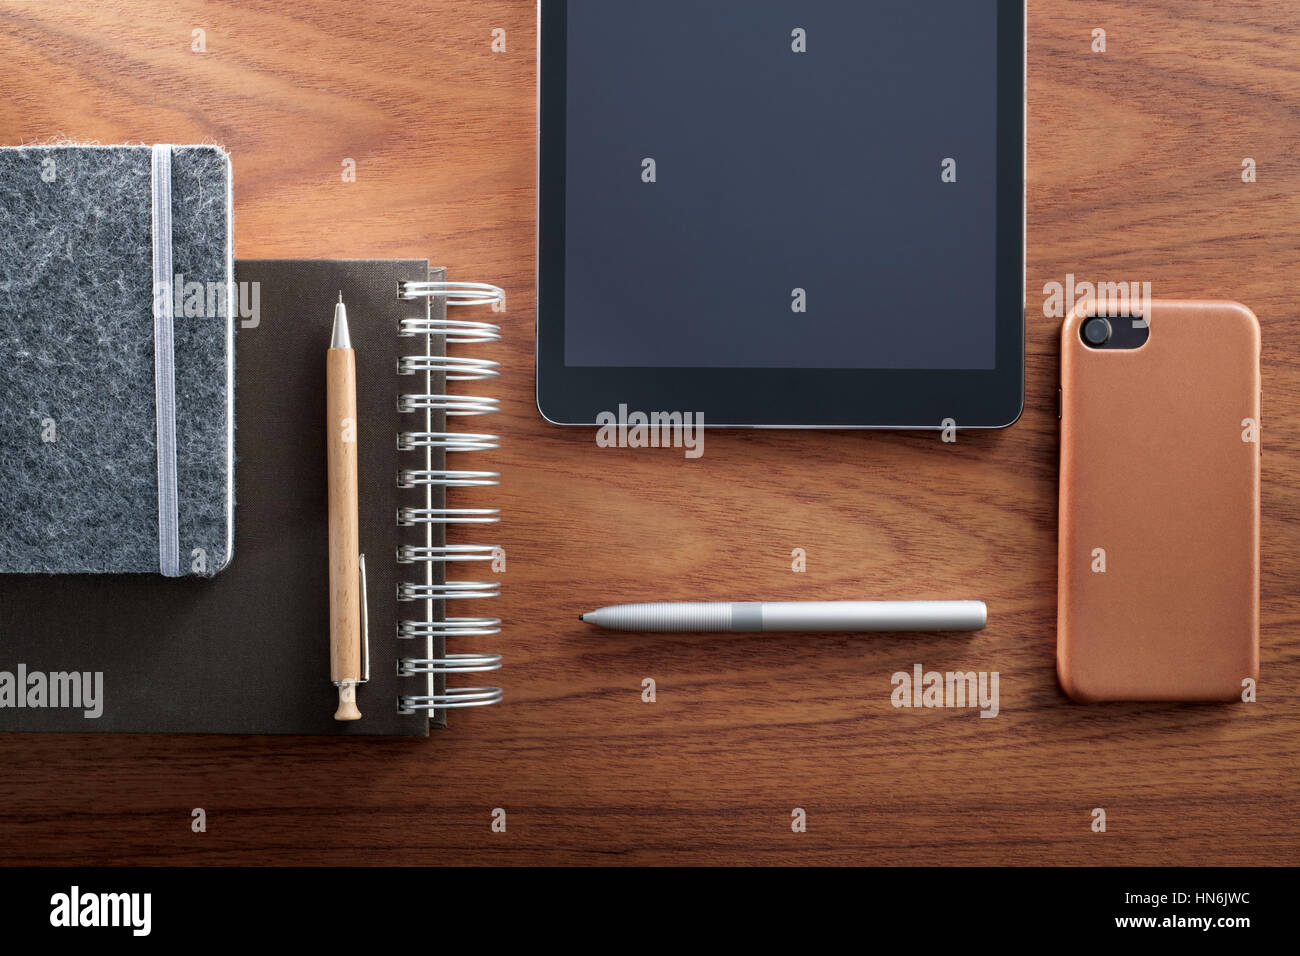 Digital Tablet, Smartphone, Notepad, Pen and pencil On Wooden Desk. Analog vs digital. Stock Photo